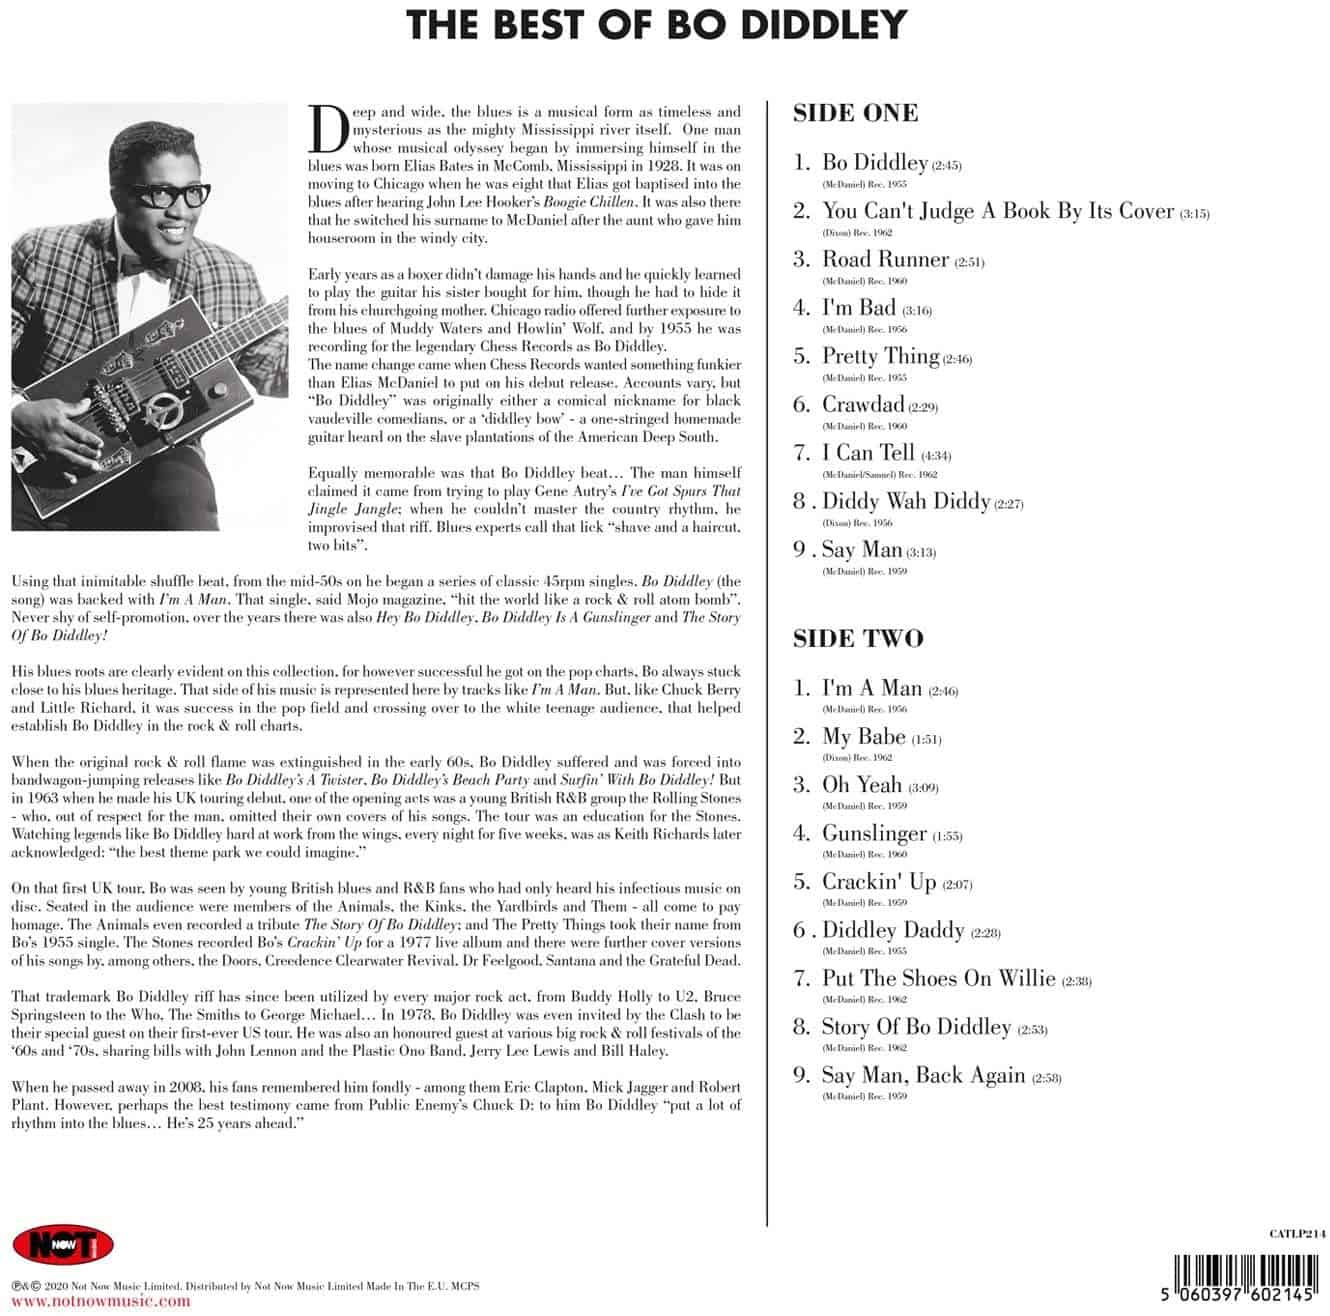 The-Best-Of-Bo-Diddley-vinyl-record-album-back